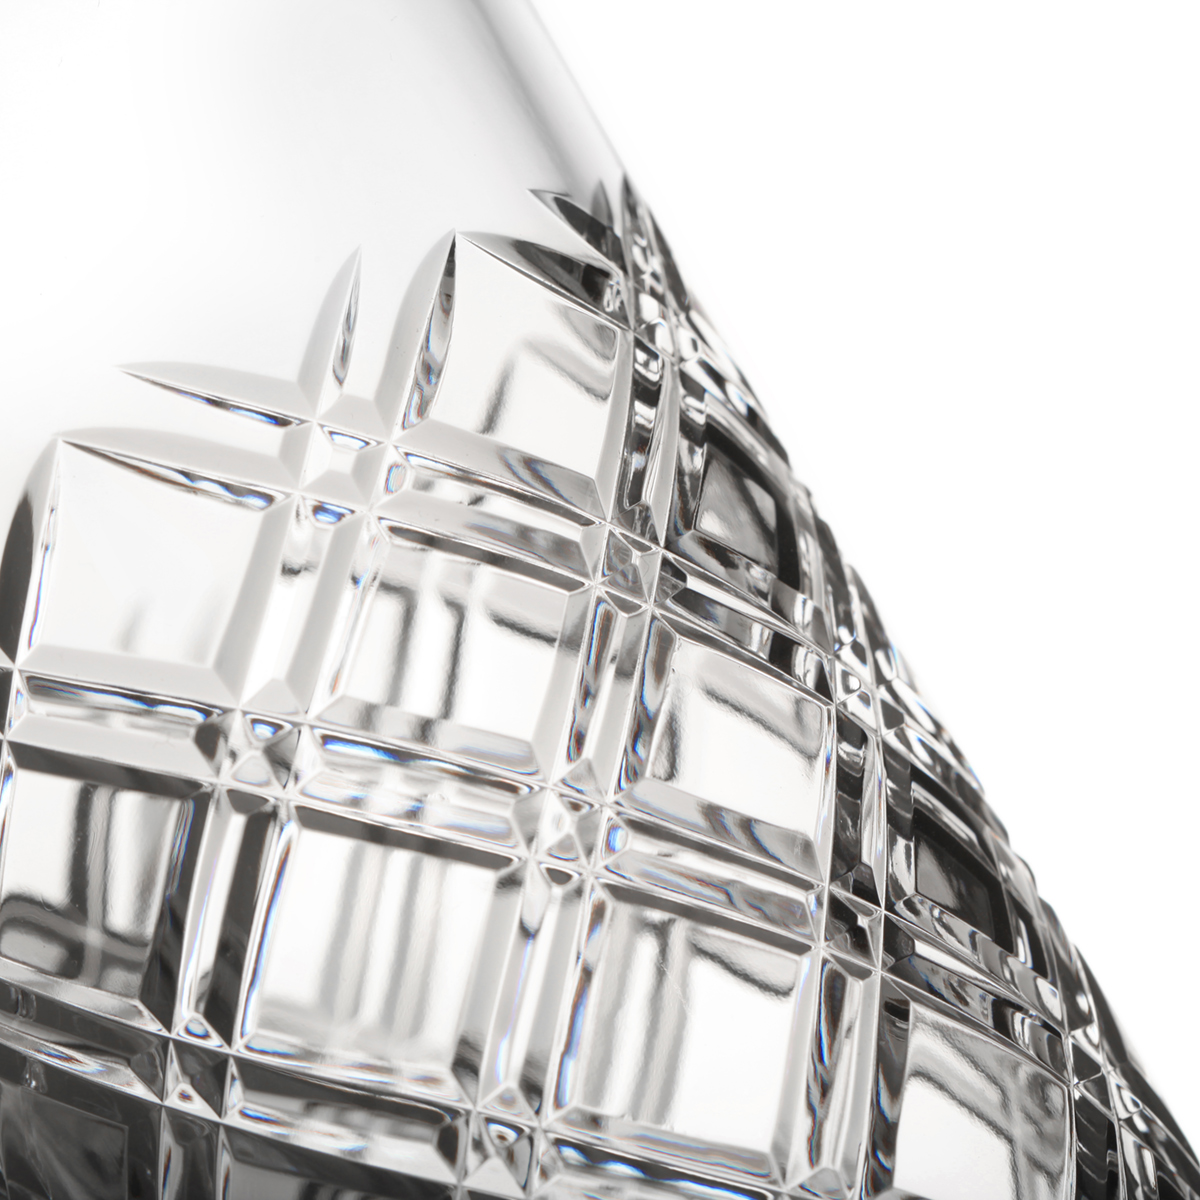 Tartan - 2 x Highball Longdrink Glas - Handgefertigt aus Kristallglas